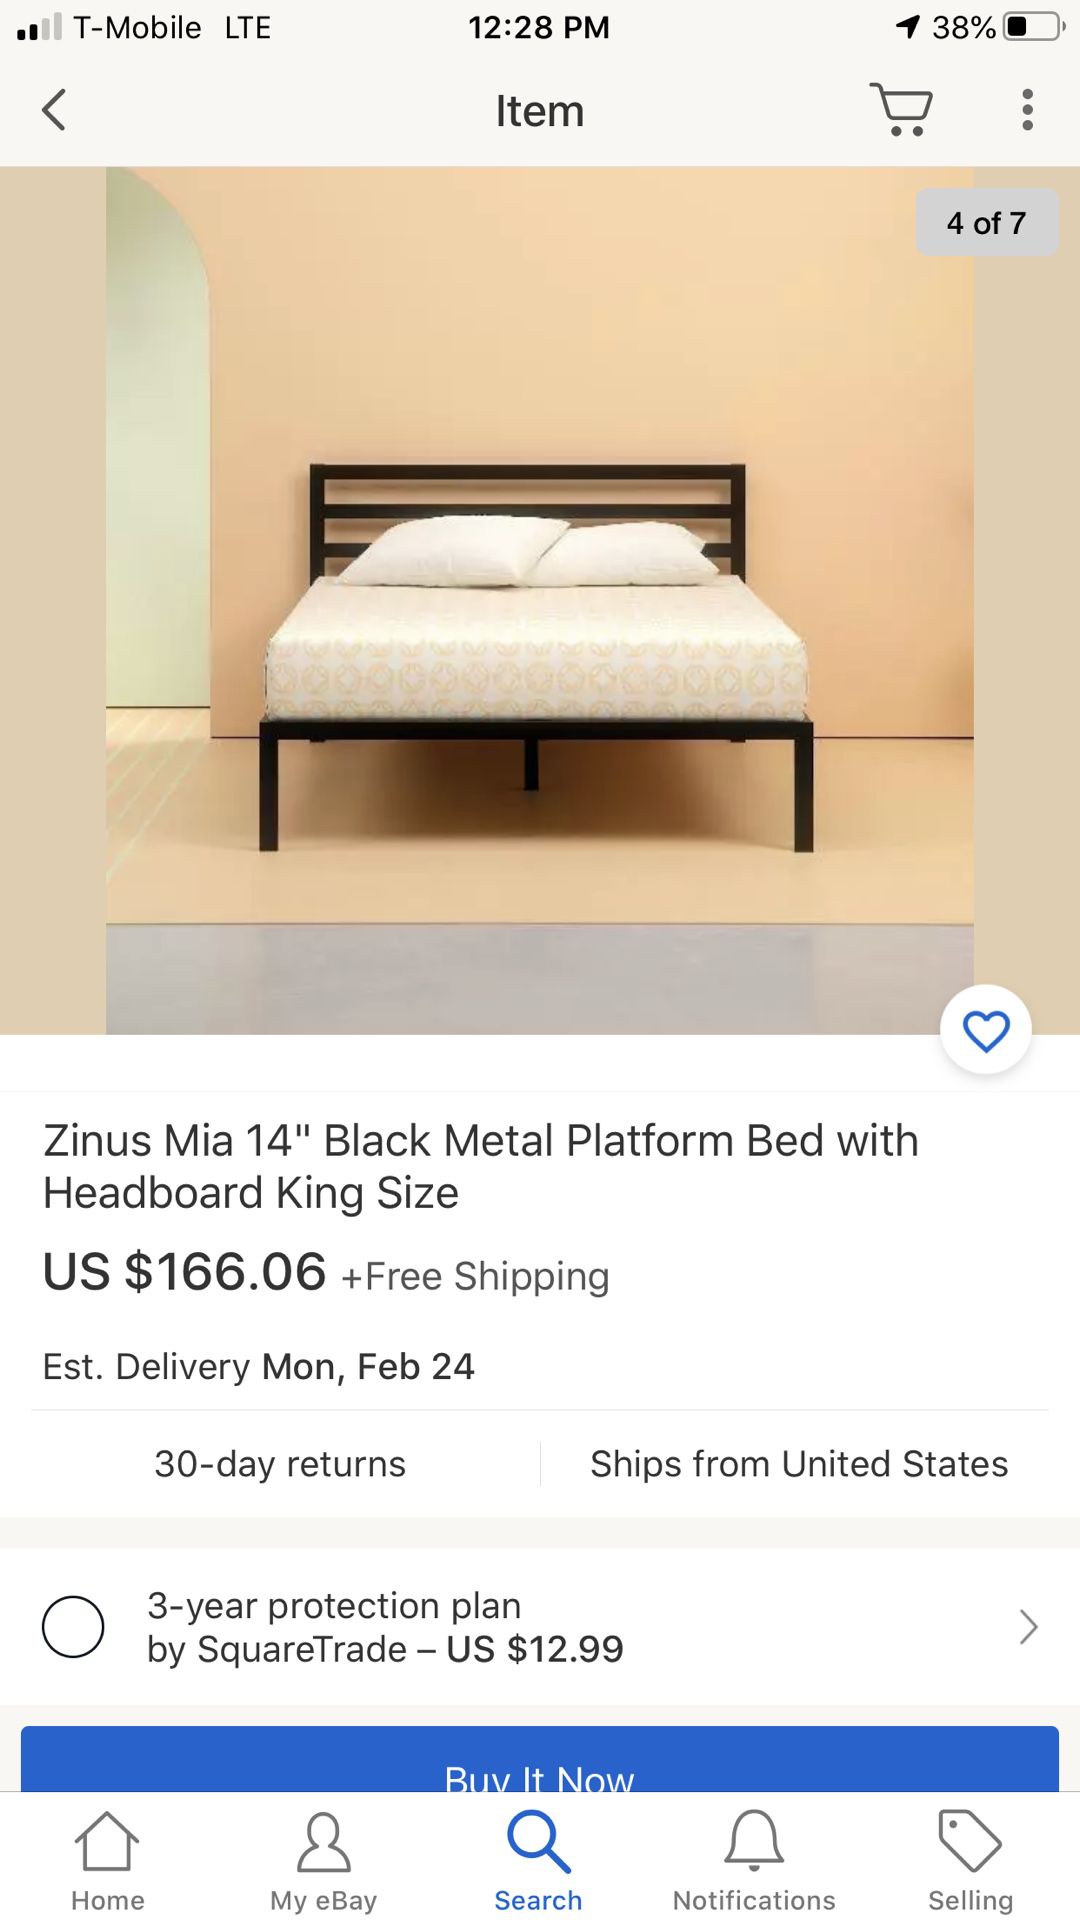 Zinus Mia 14" Black Metal Platform Bed with Headboard King Size